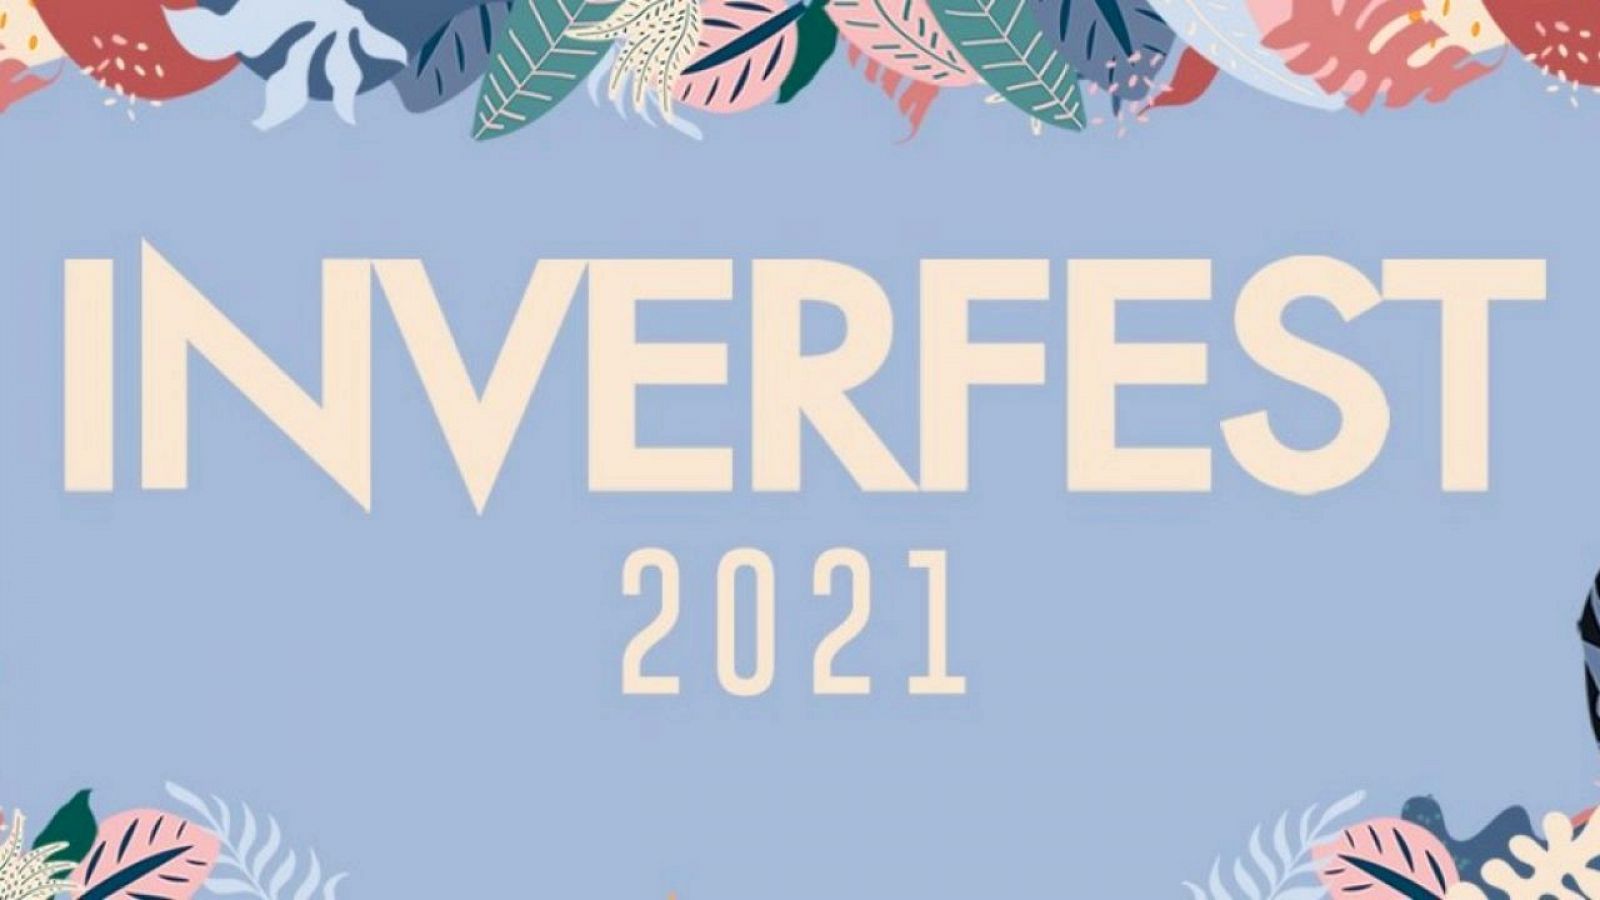 Inverfest 2021